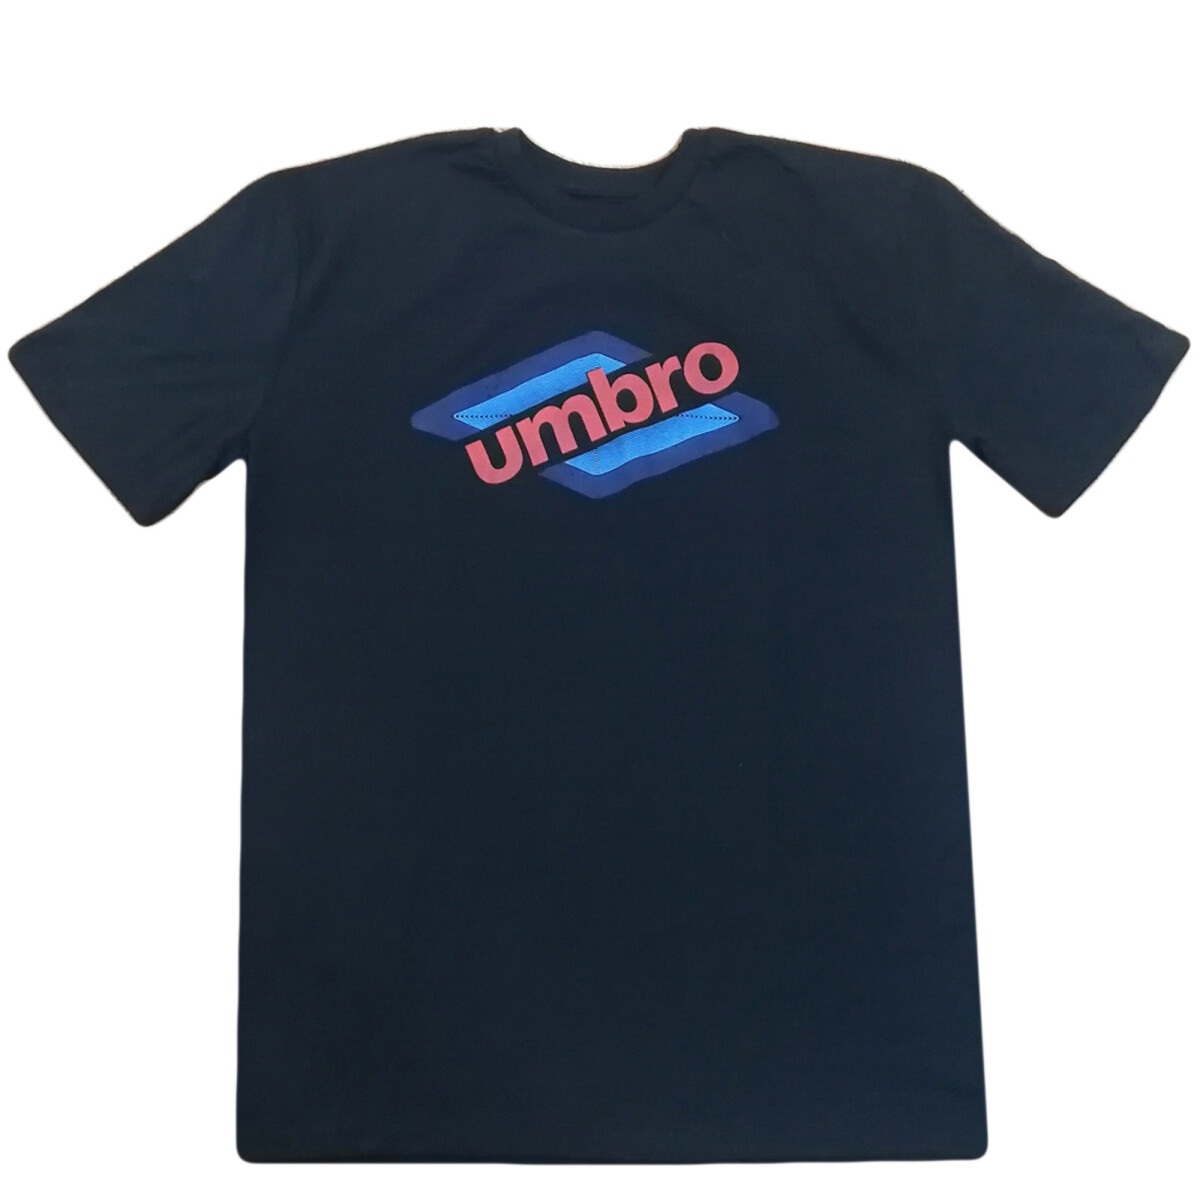 Remera Out Logo Umbro - Negro/Rojo/Azul 